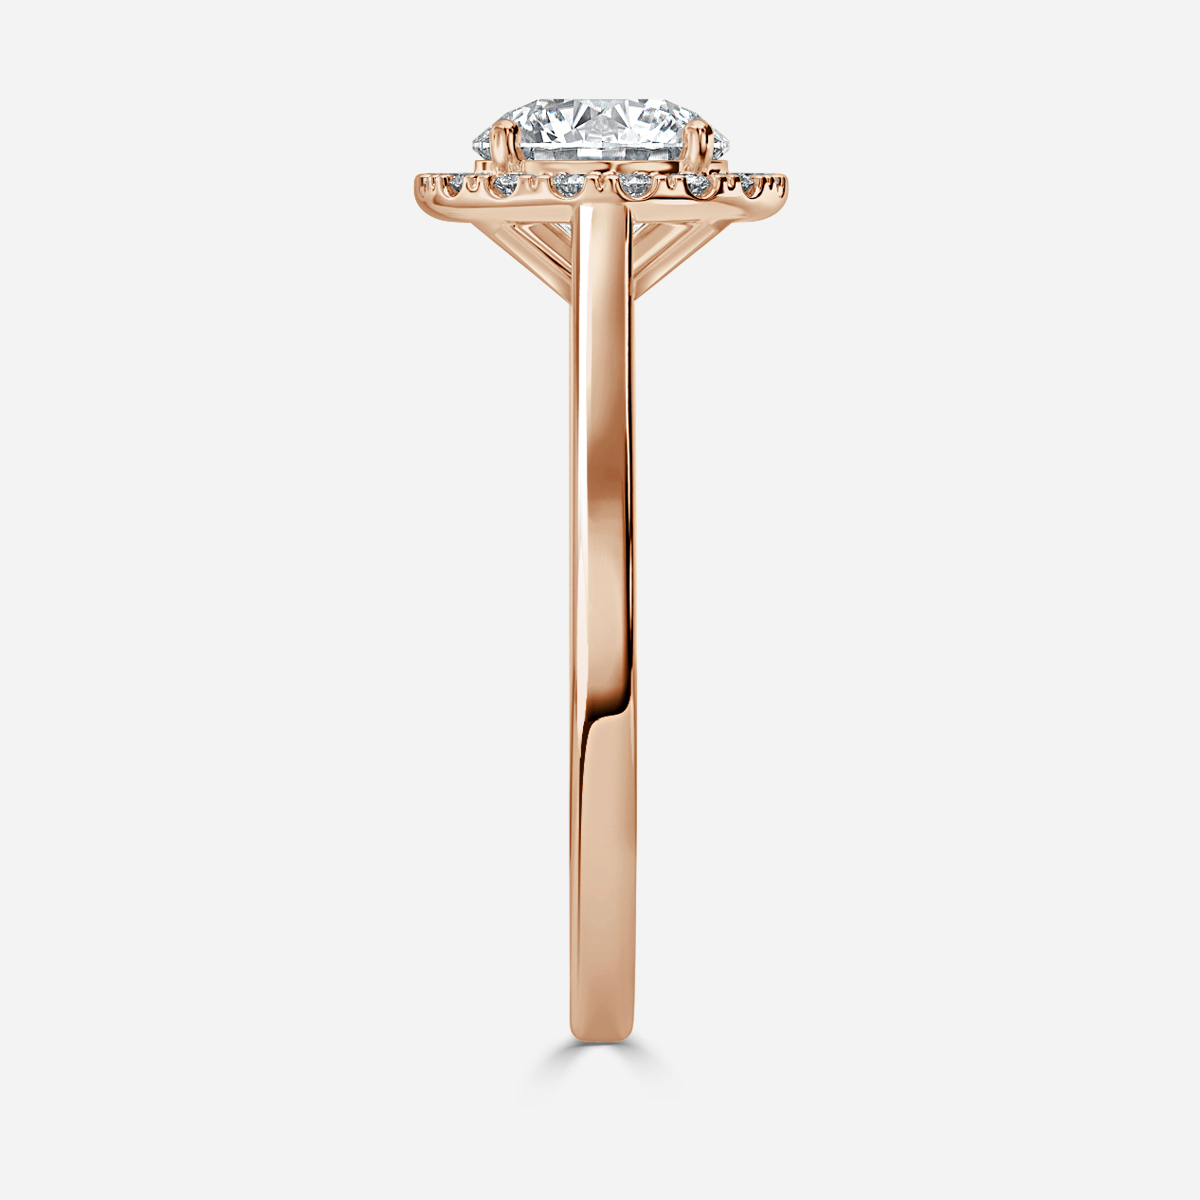 Maya Petite Plain Rose Gold Halo Engagement Ring